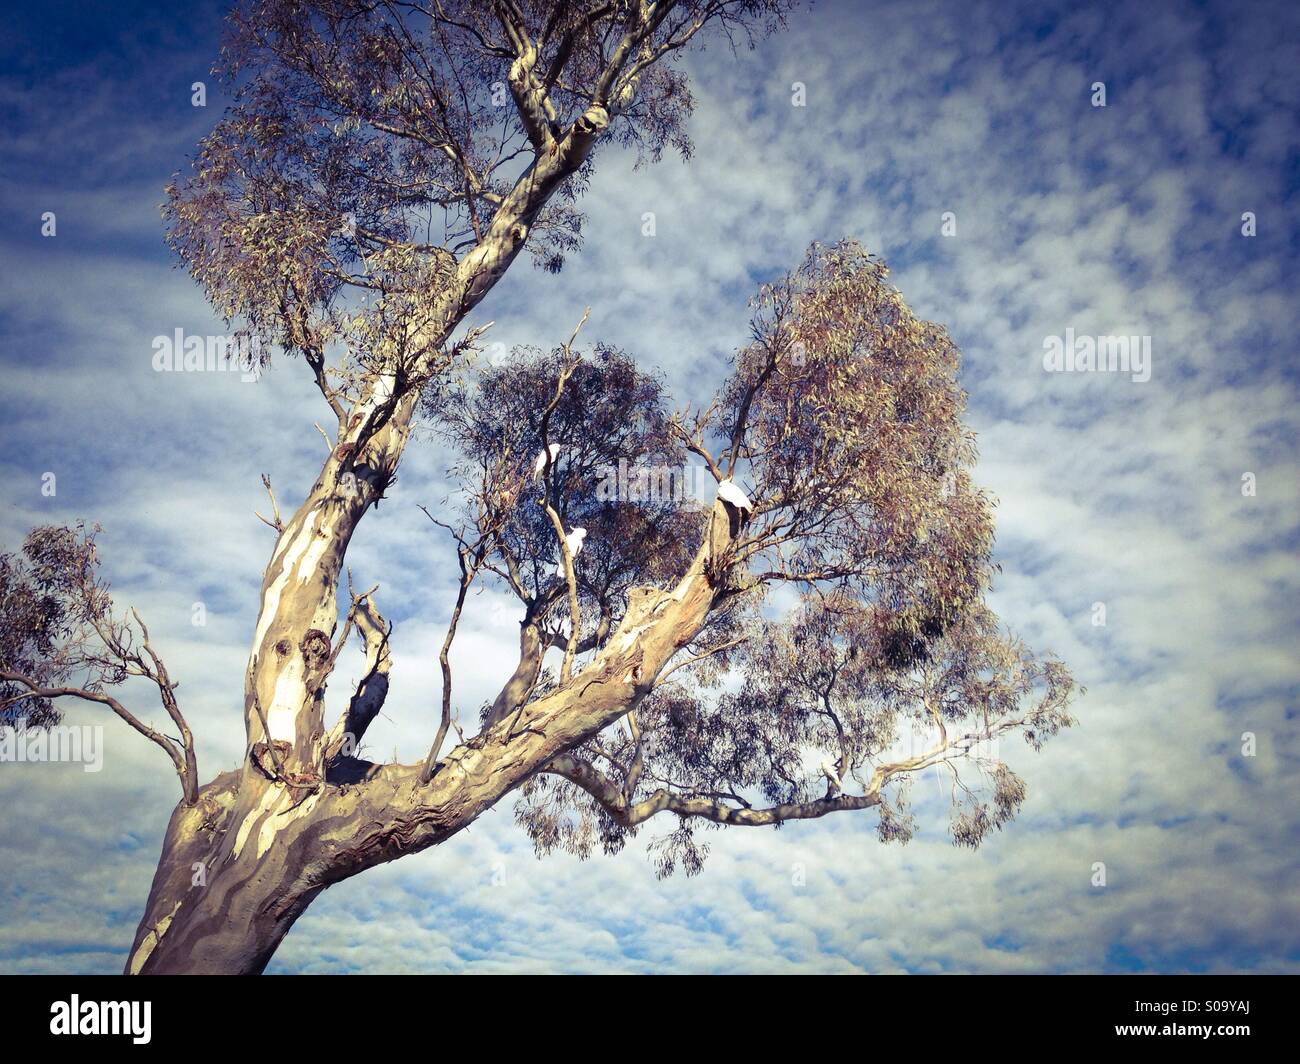 3 Cockatoos in Eucalytus Tree - Australian outback Stock Photo